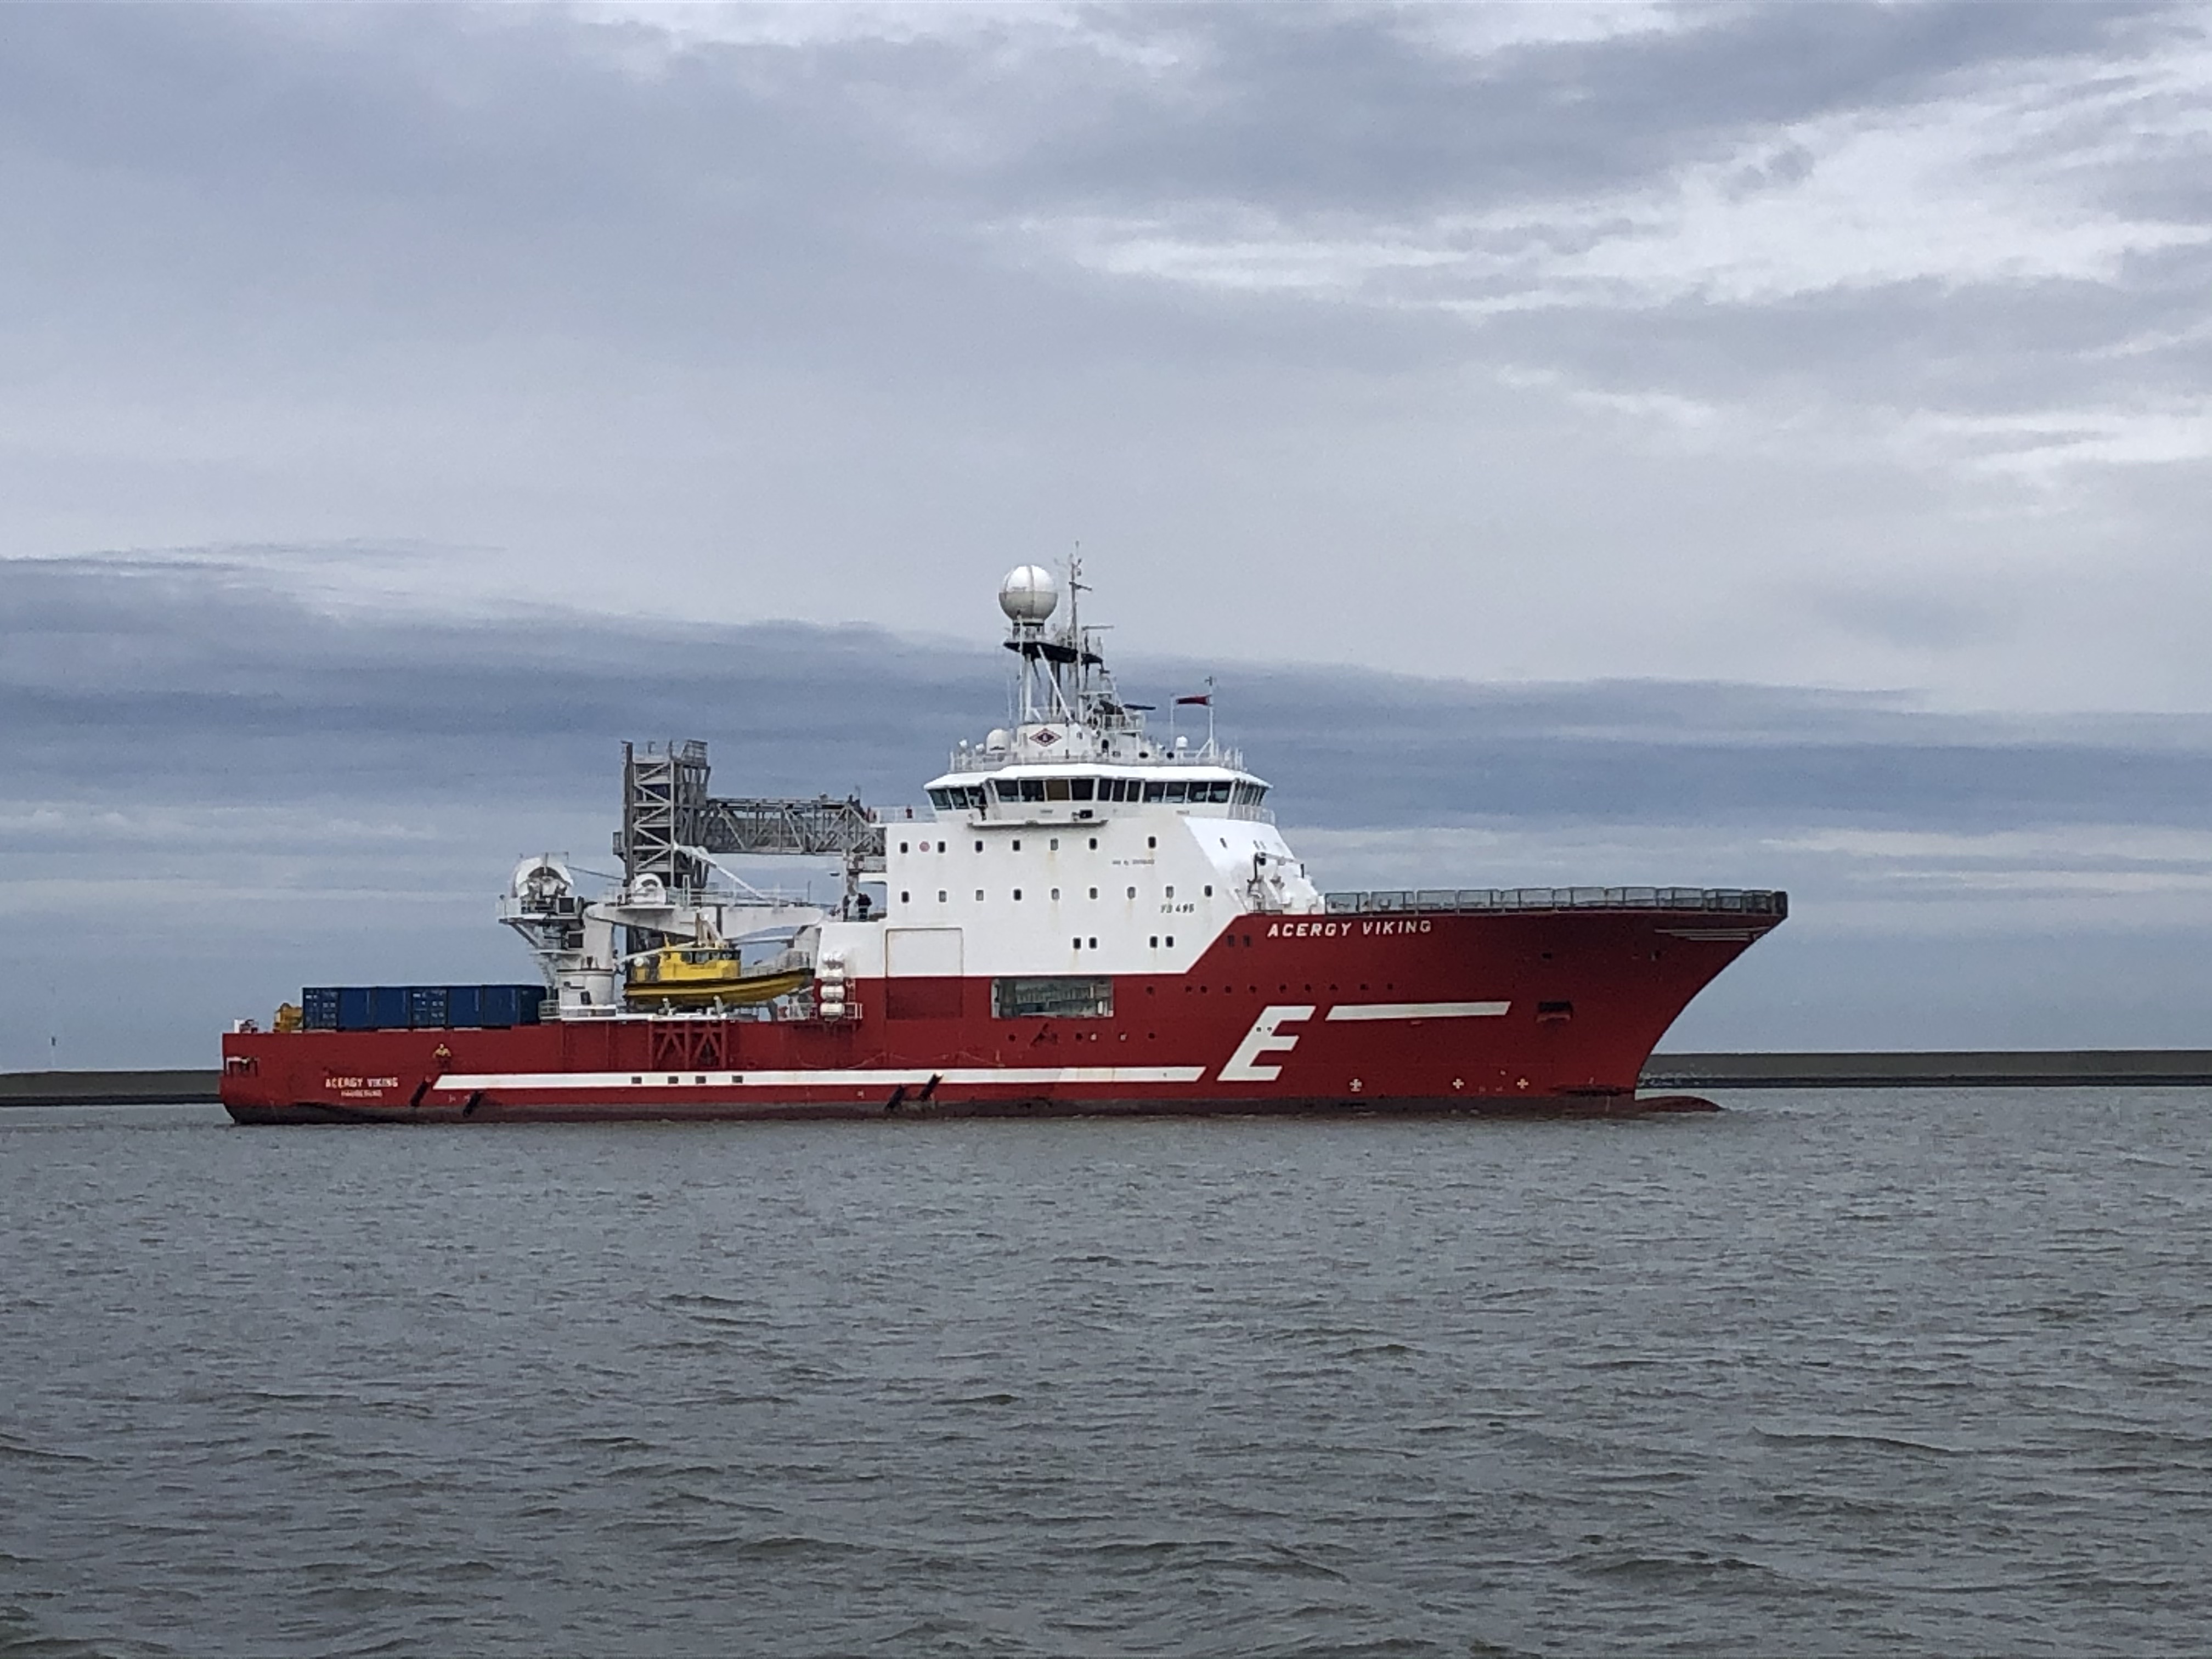 Eidesvik Offshore's service operations vessel Acergy Viking